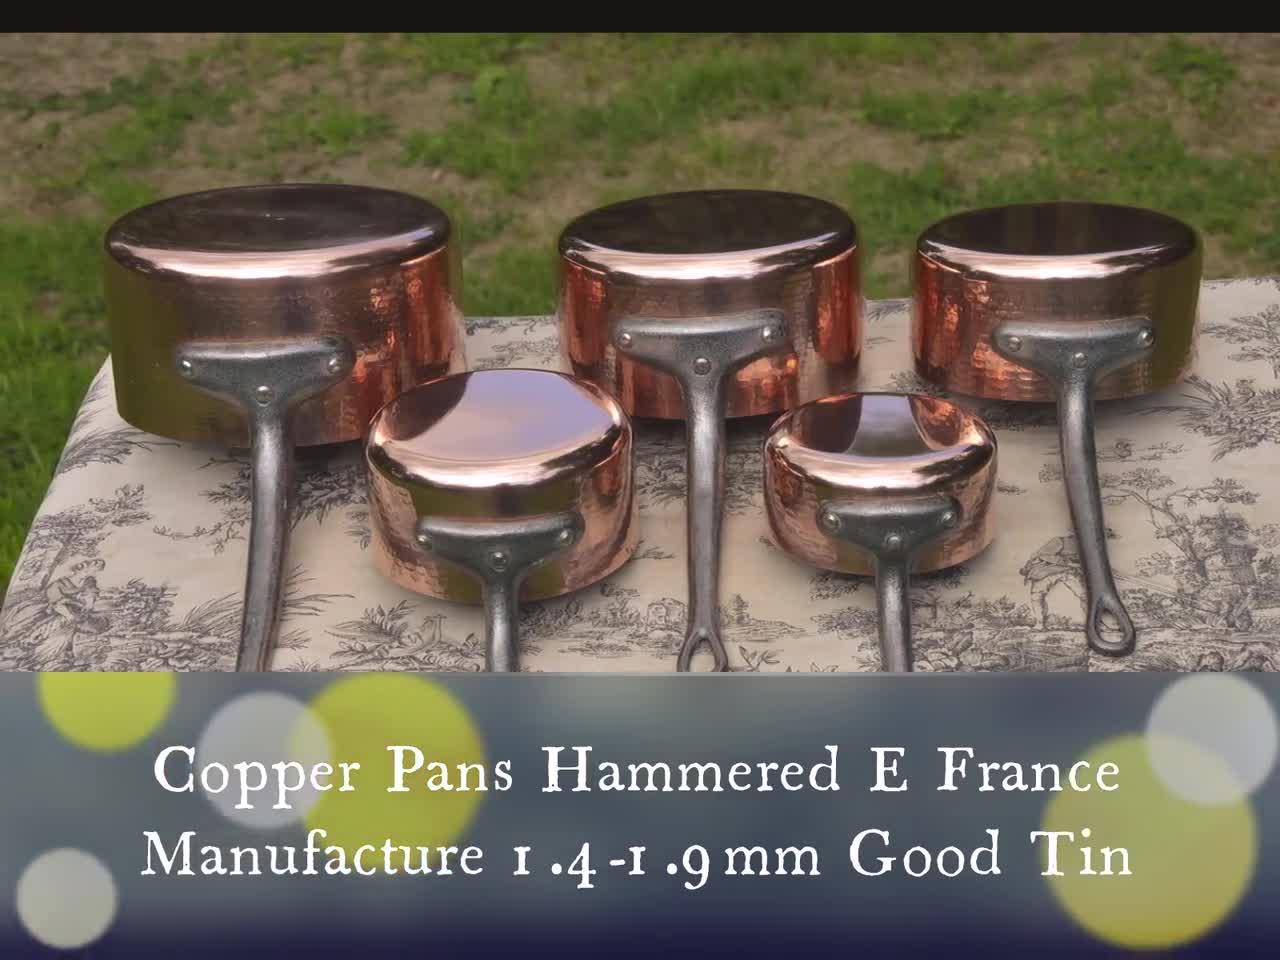 https://v.etsystatic.com/video/upload/q_auto/Copper_Pans_Hammered_E_France_Manufacture_1.4-1.9mm_Good_Tin_subzvy.jpg